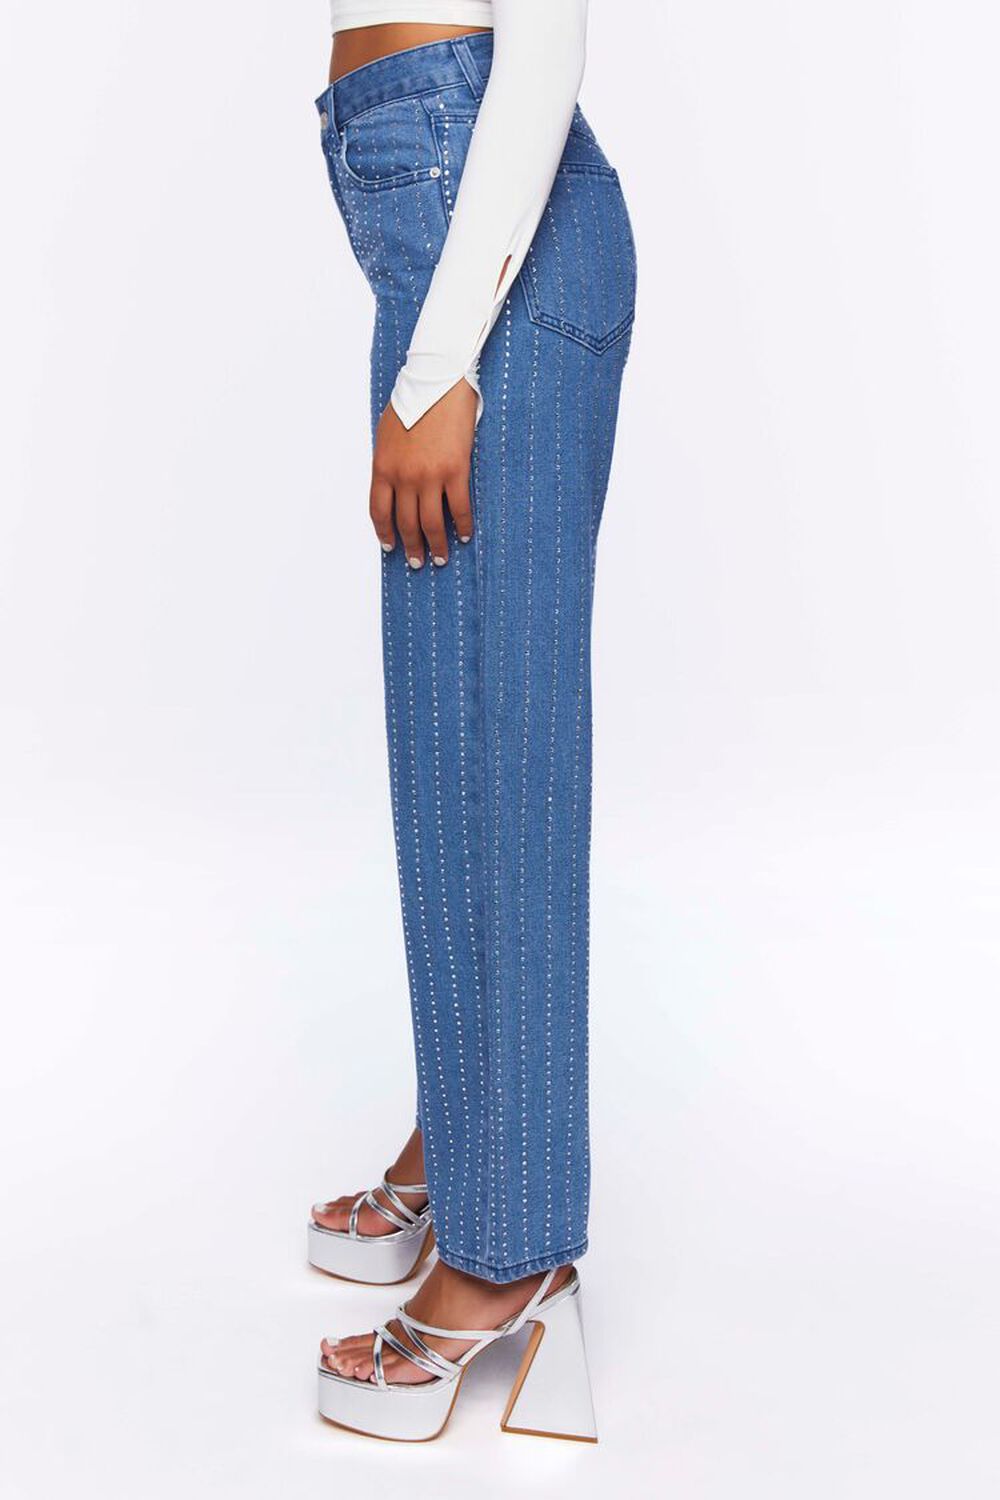 MEDIUM DENIM Rhinestone-Striped 90s-Fit Jeans, image 3